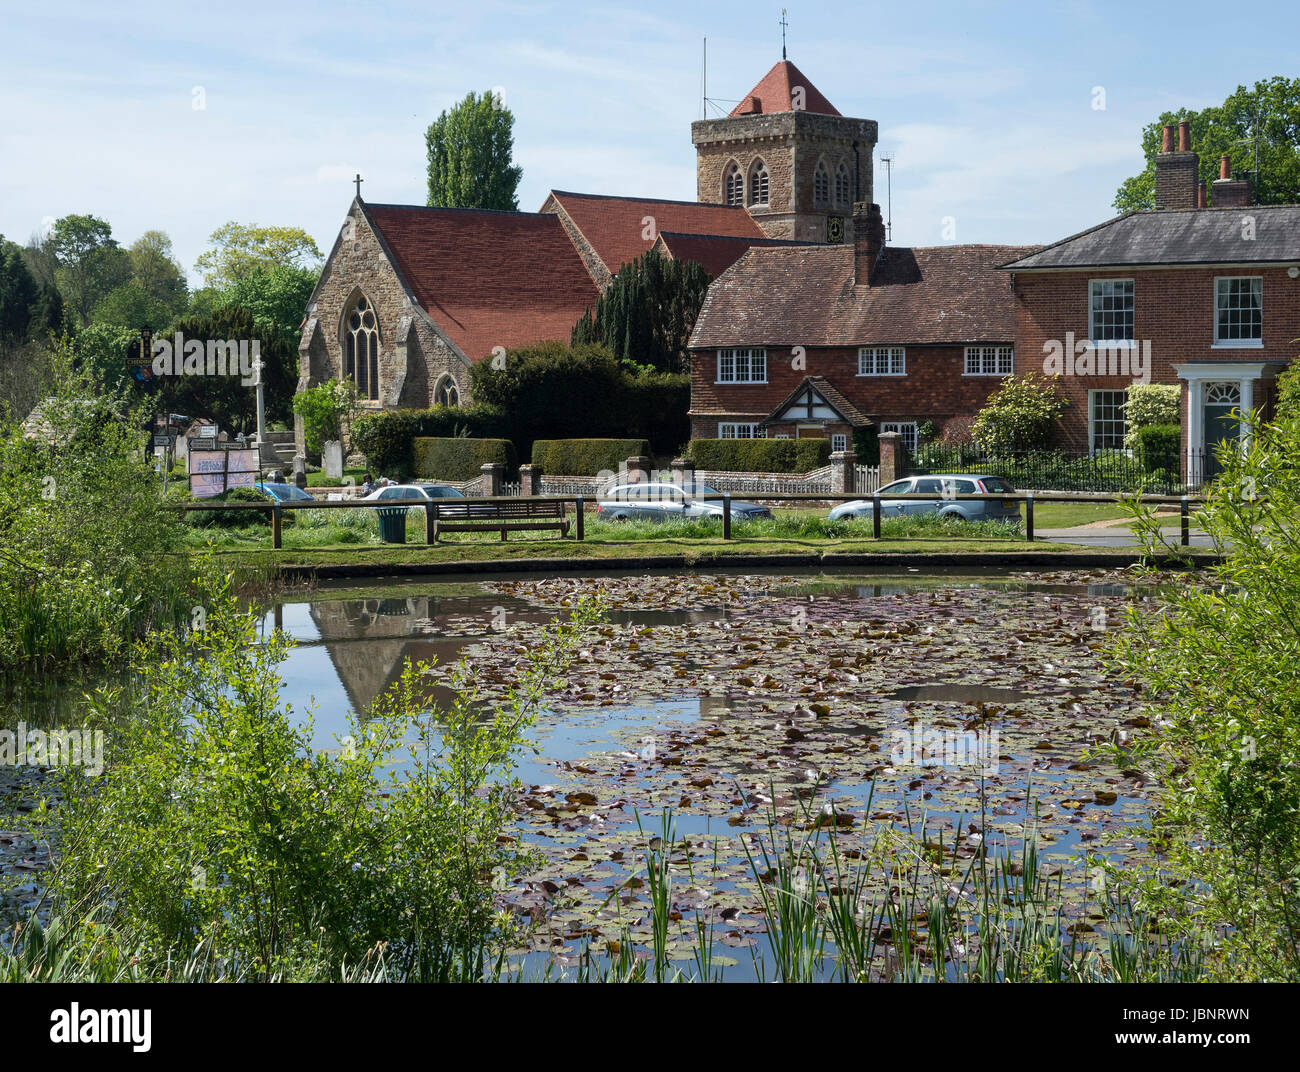 England, Surrey, Chiddingfold, StMary's church & pond Stock Photo